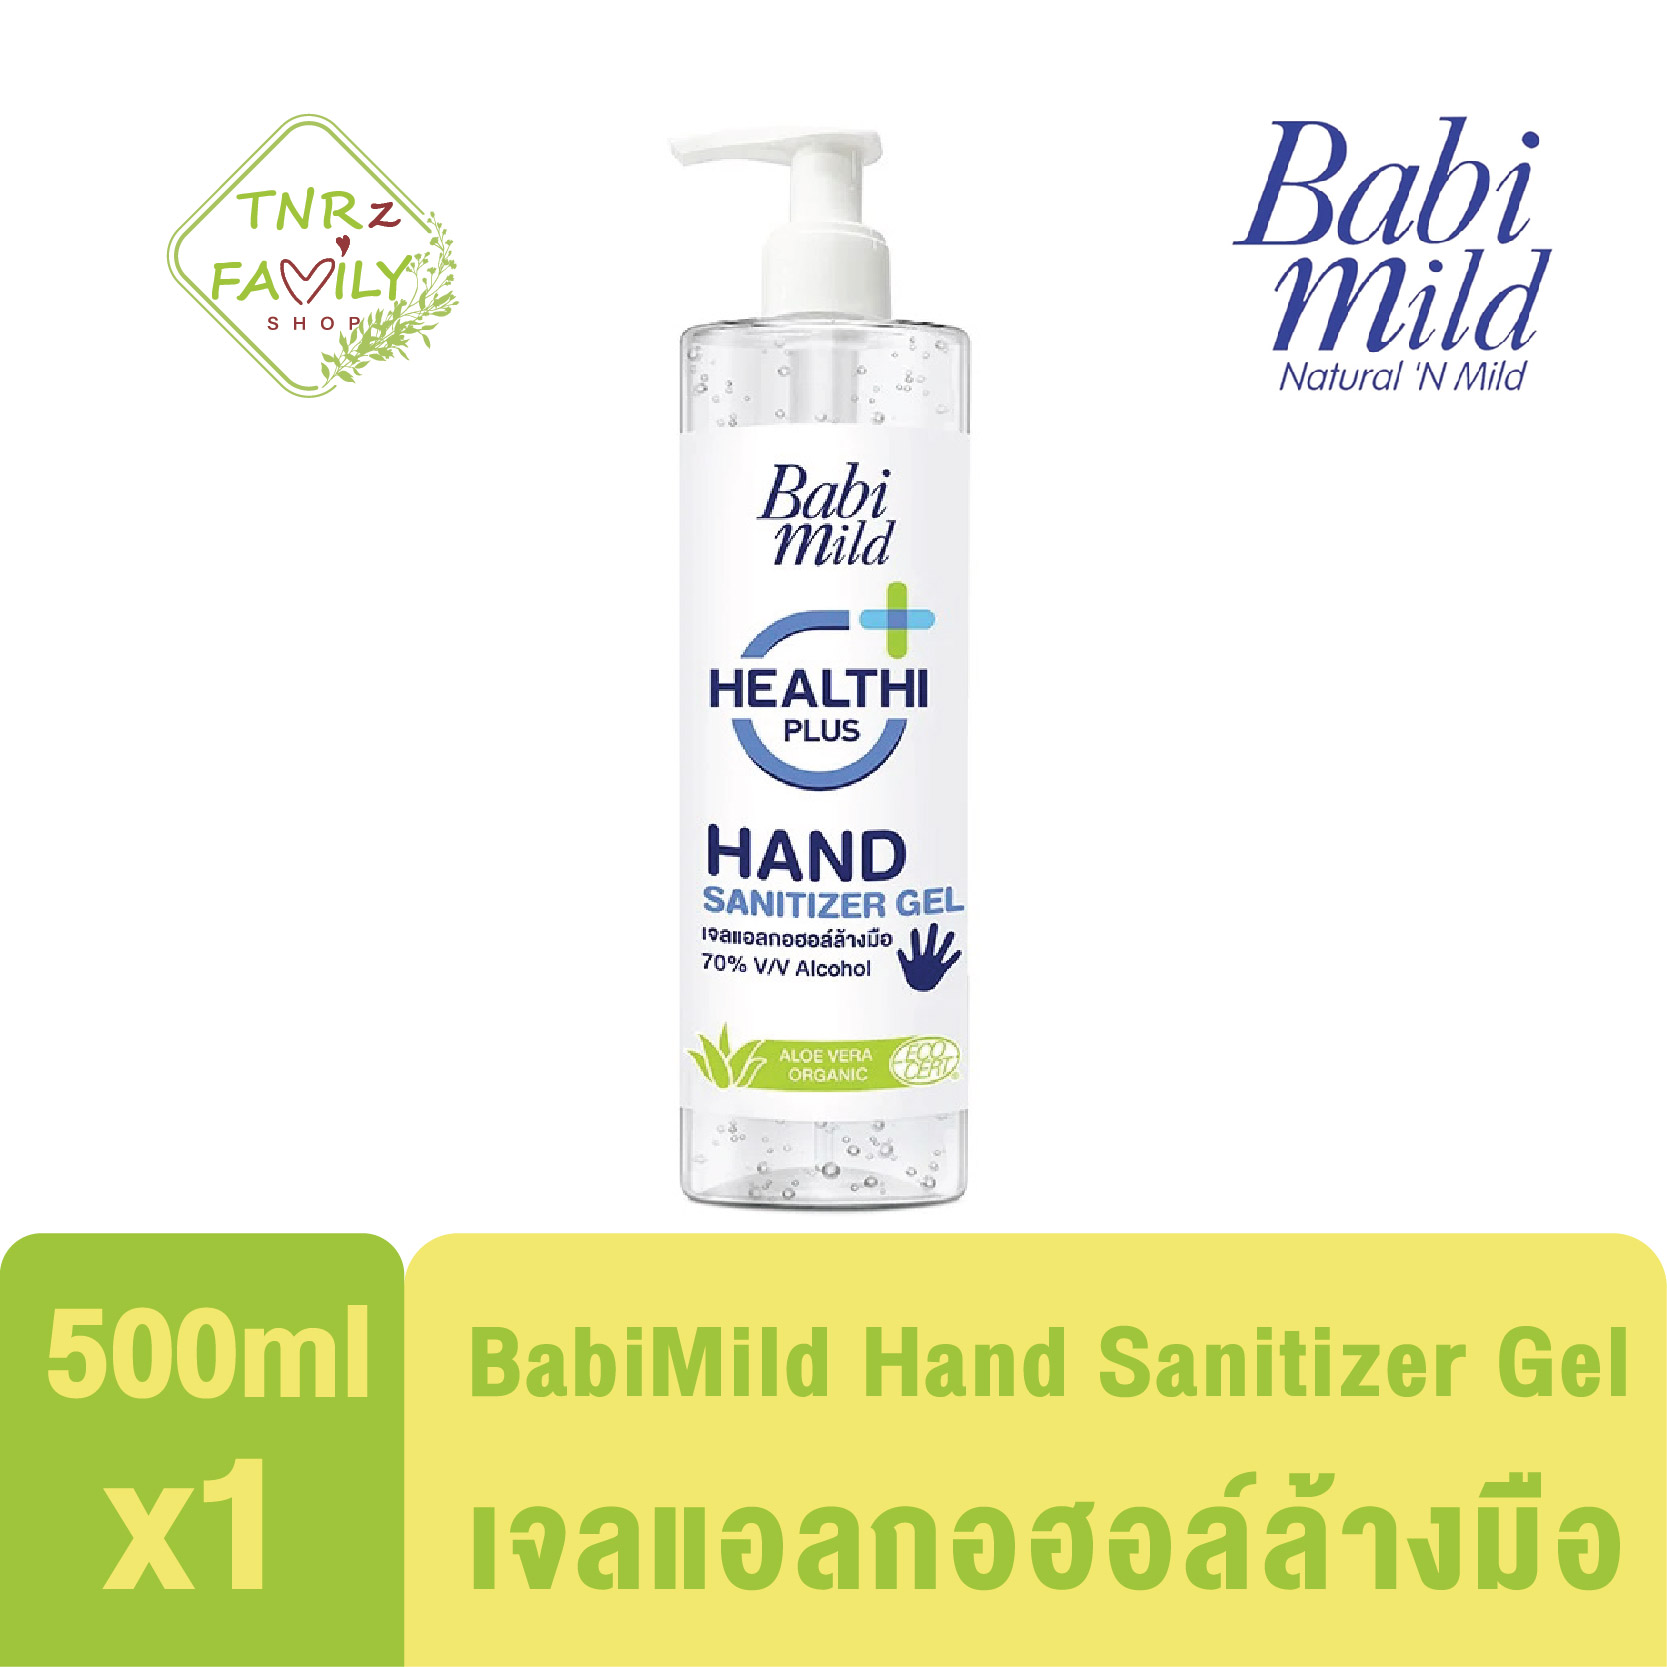 [500ml]BabiMild® Natural Hand Sanitizer Ge ผลิตภัณฑ์เจลแอลกอฮอล์ทำความสะอาดมือ เบบี้มายด์ แนชเชอรัล แฮนด์ ซานิไทเซอร์ เจล / Babi Mild l 500 ml.